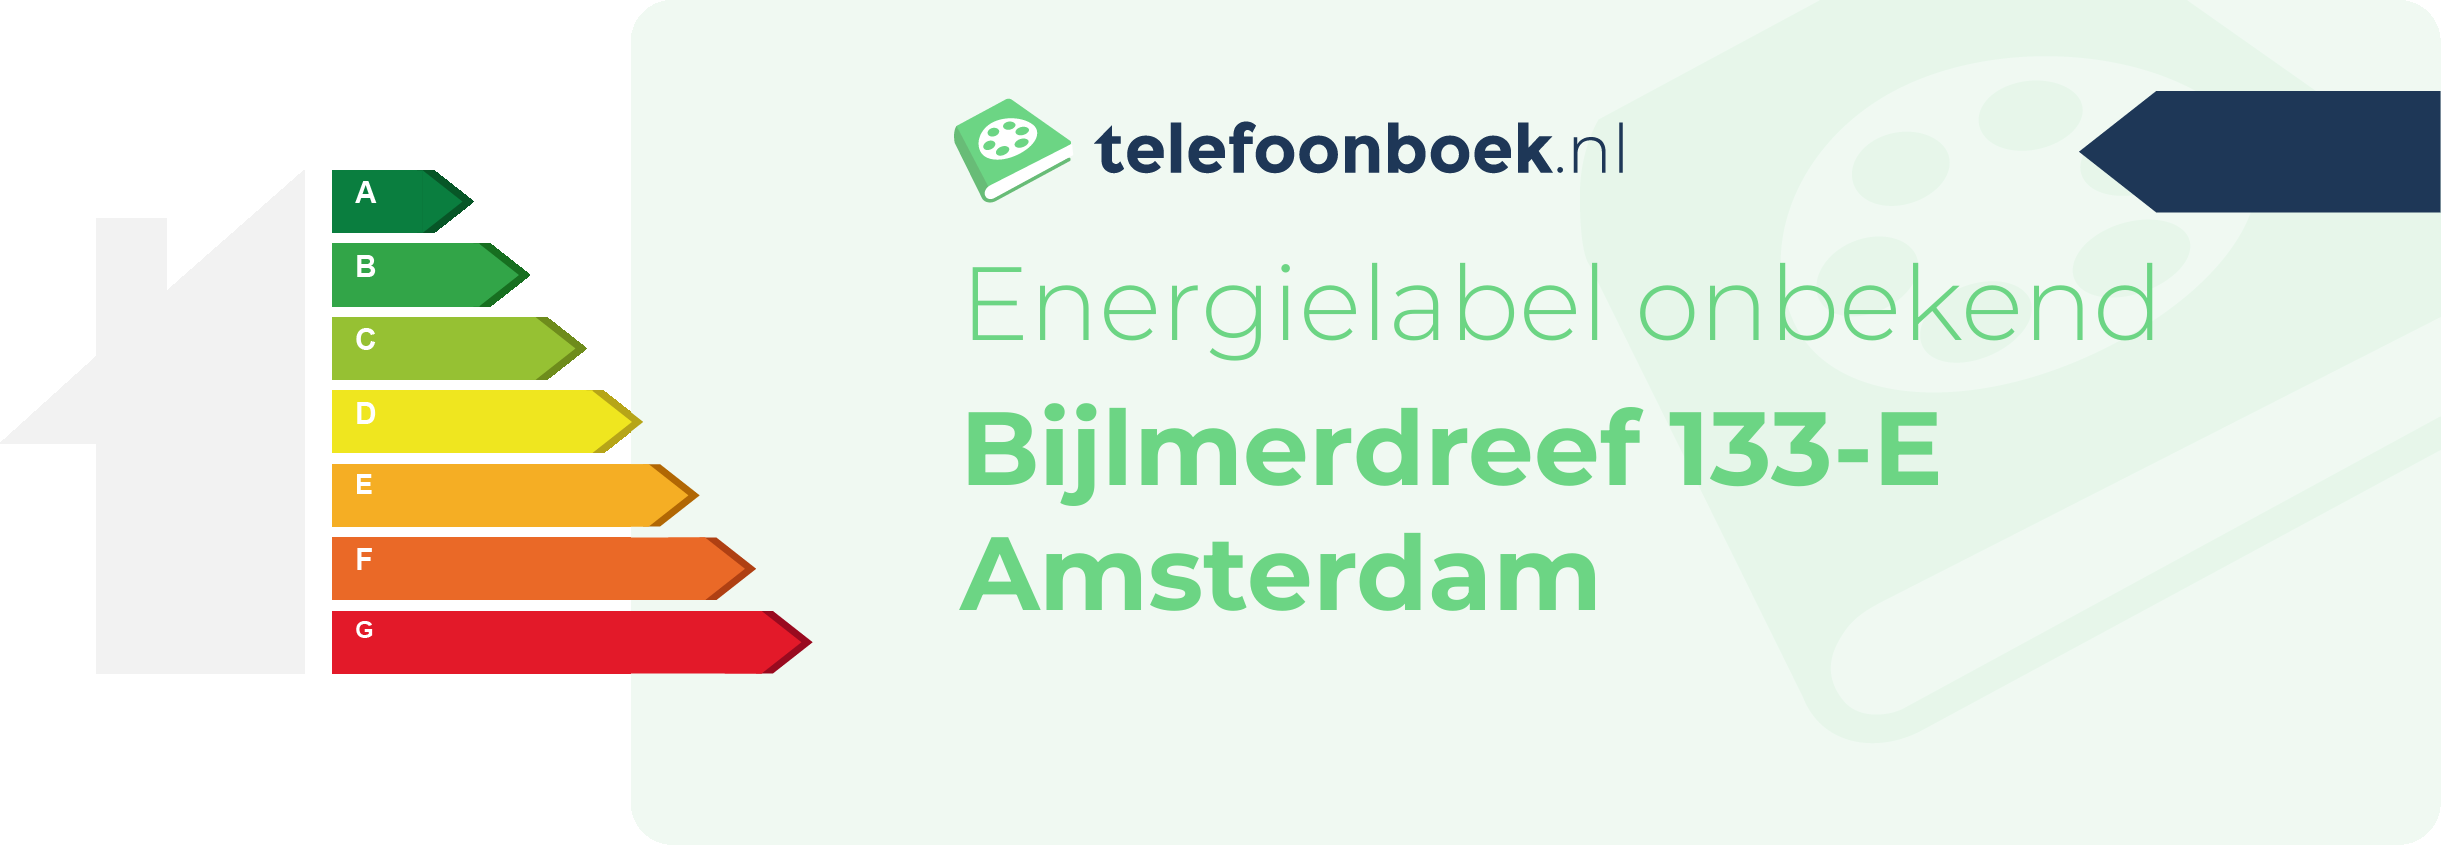 Energielabel Bijlmerdreef 133-E Amsterdam